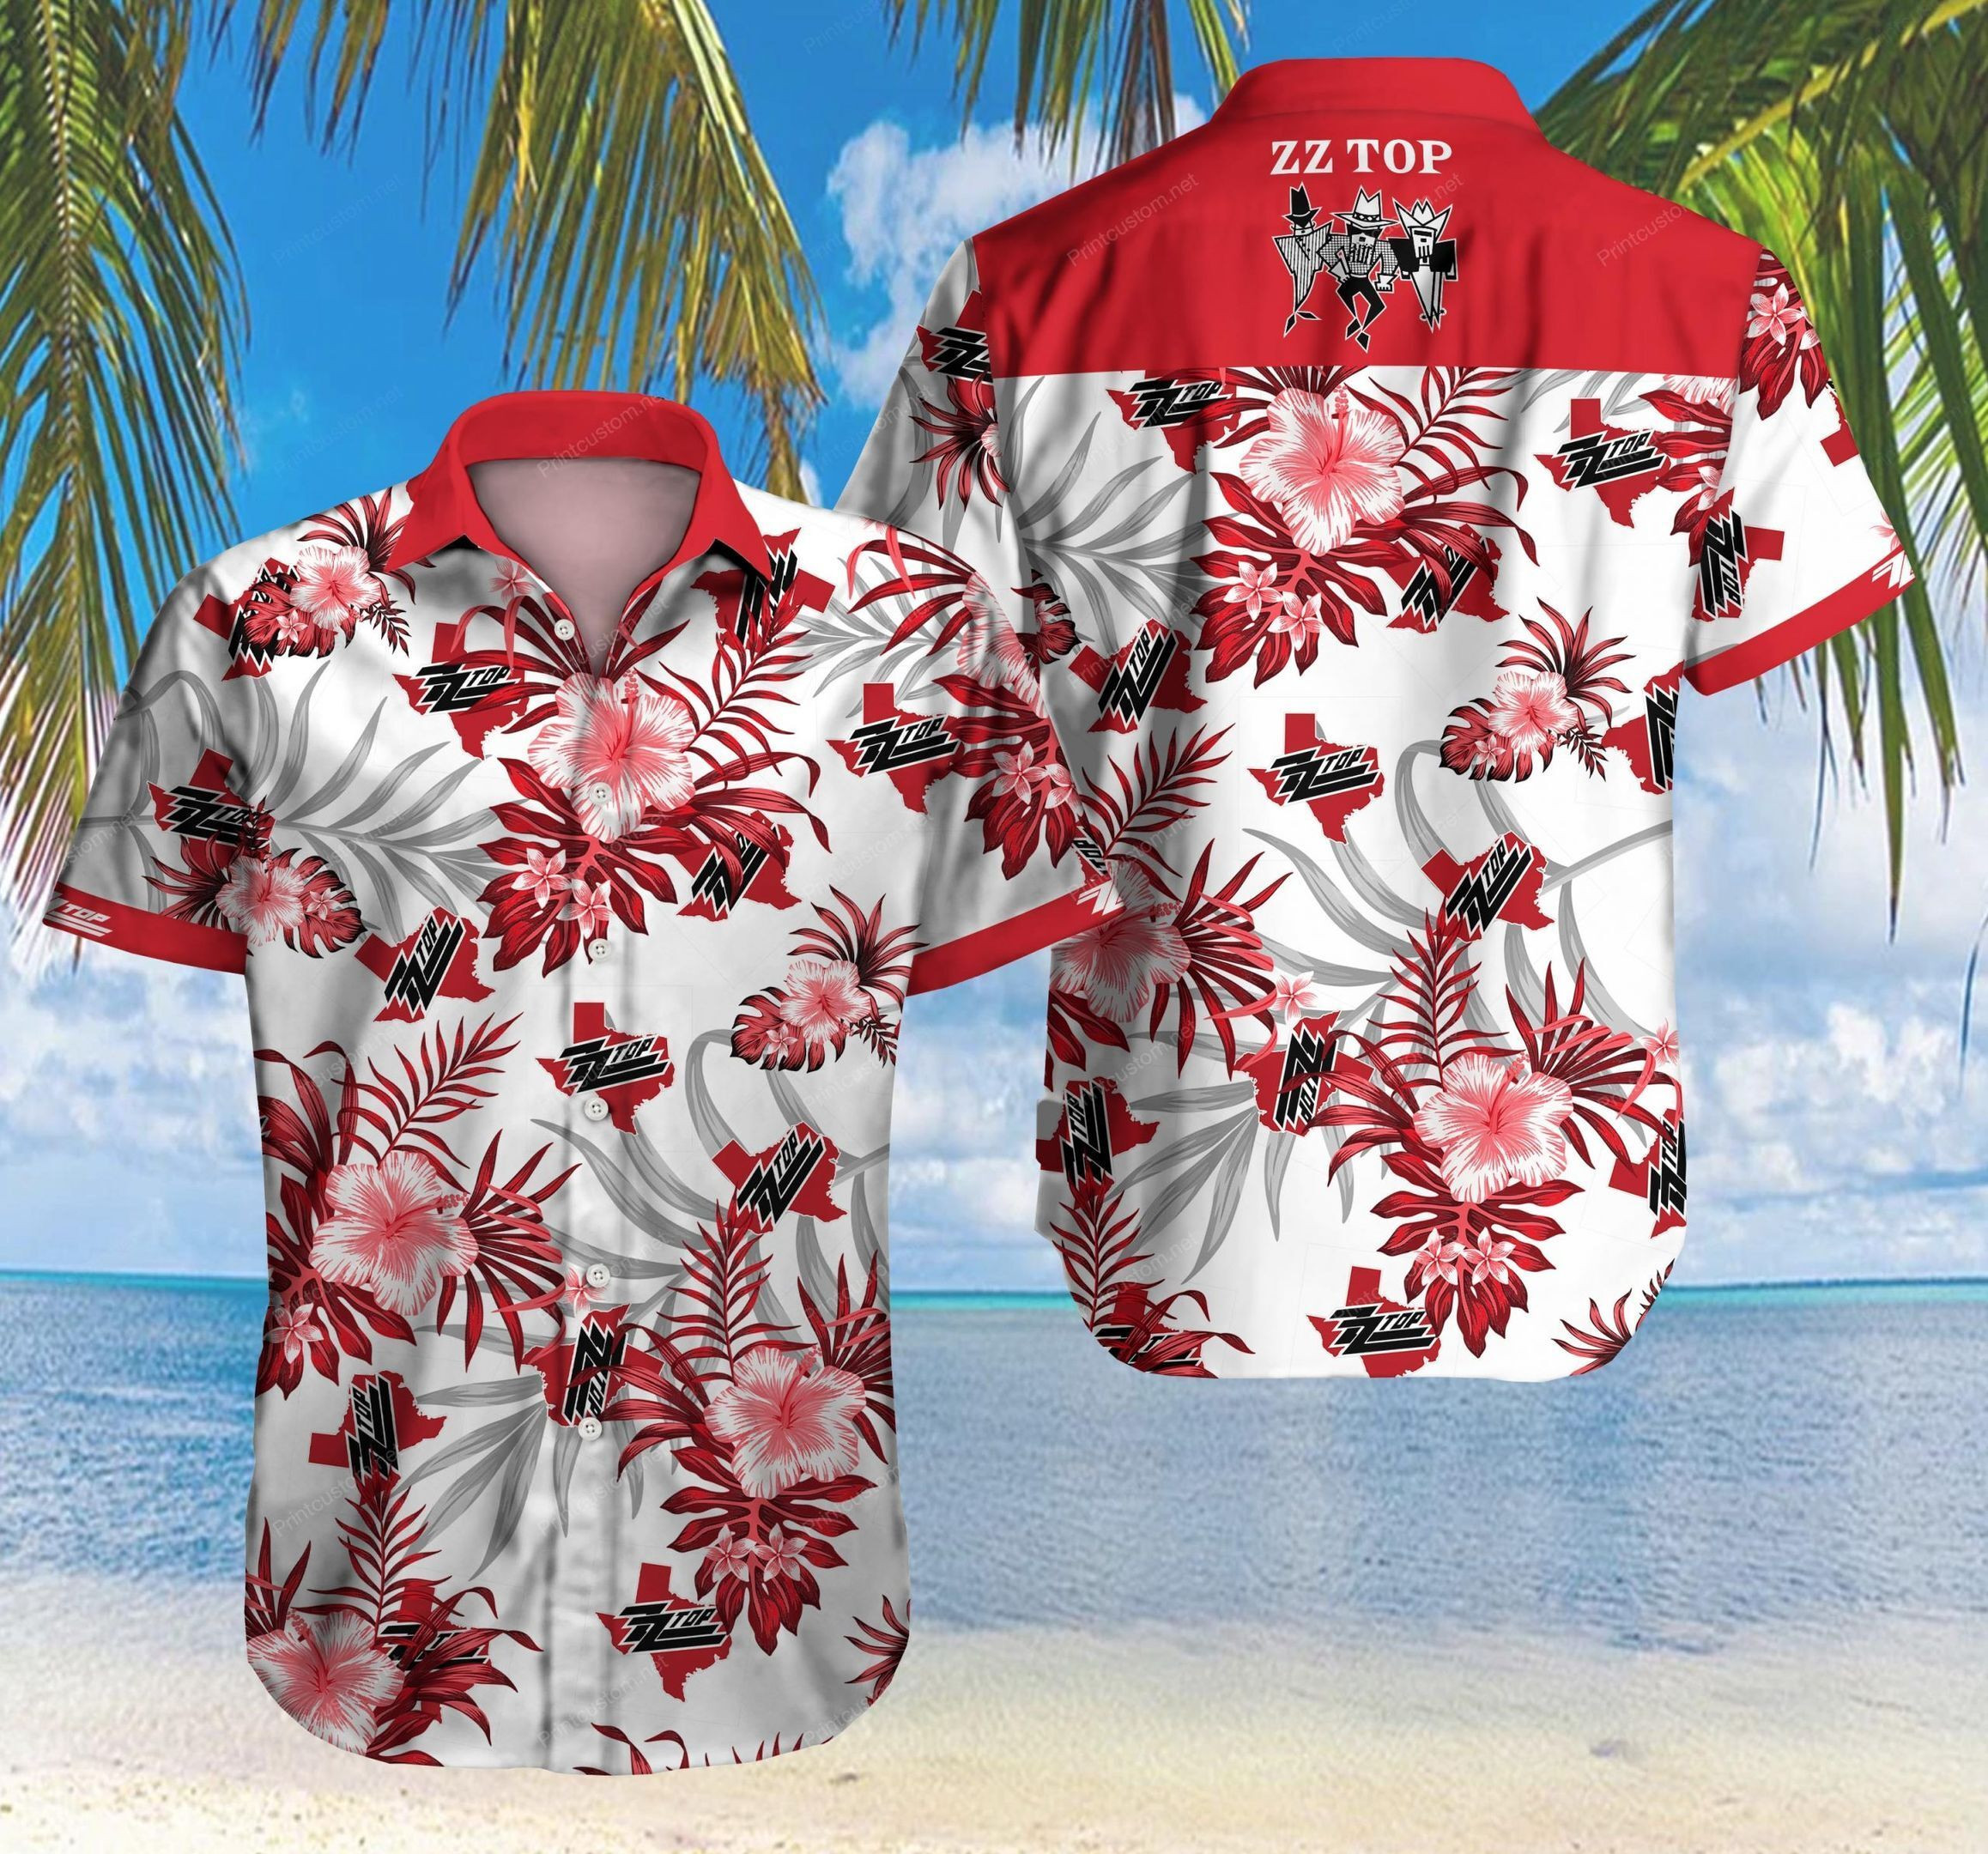 This short sleeve Hawaiian shirt is an option for a cool urban look 443